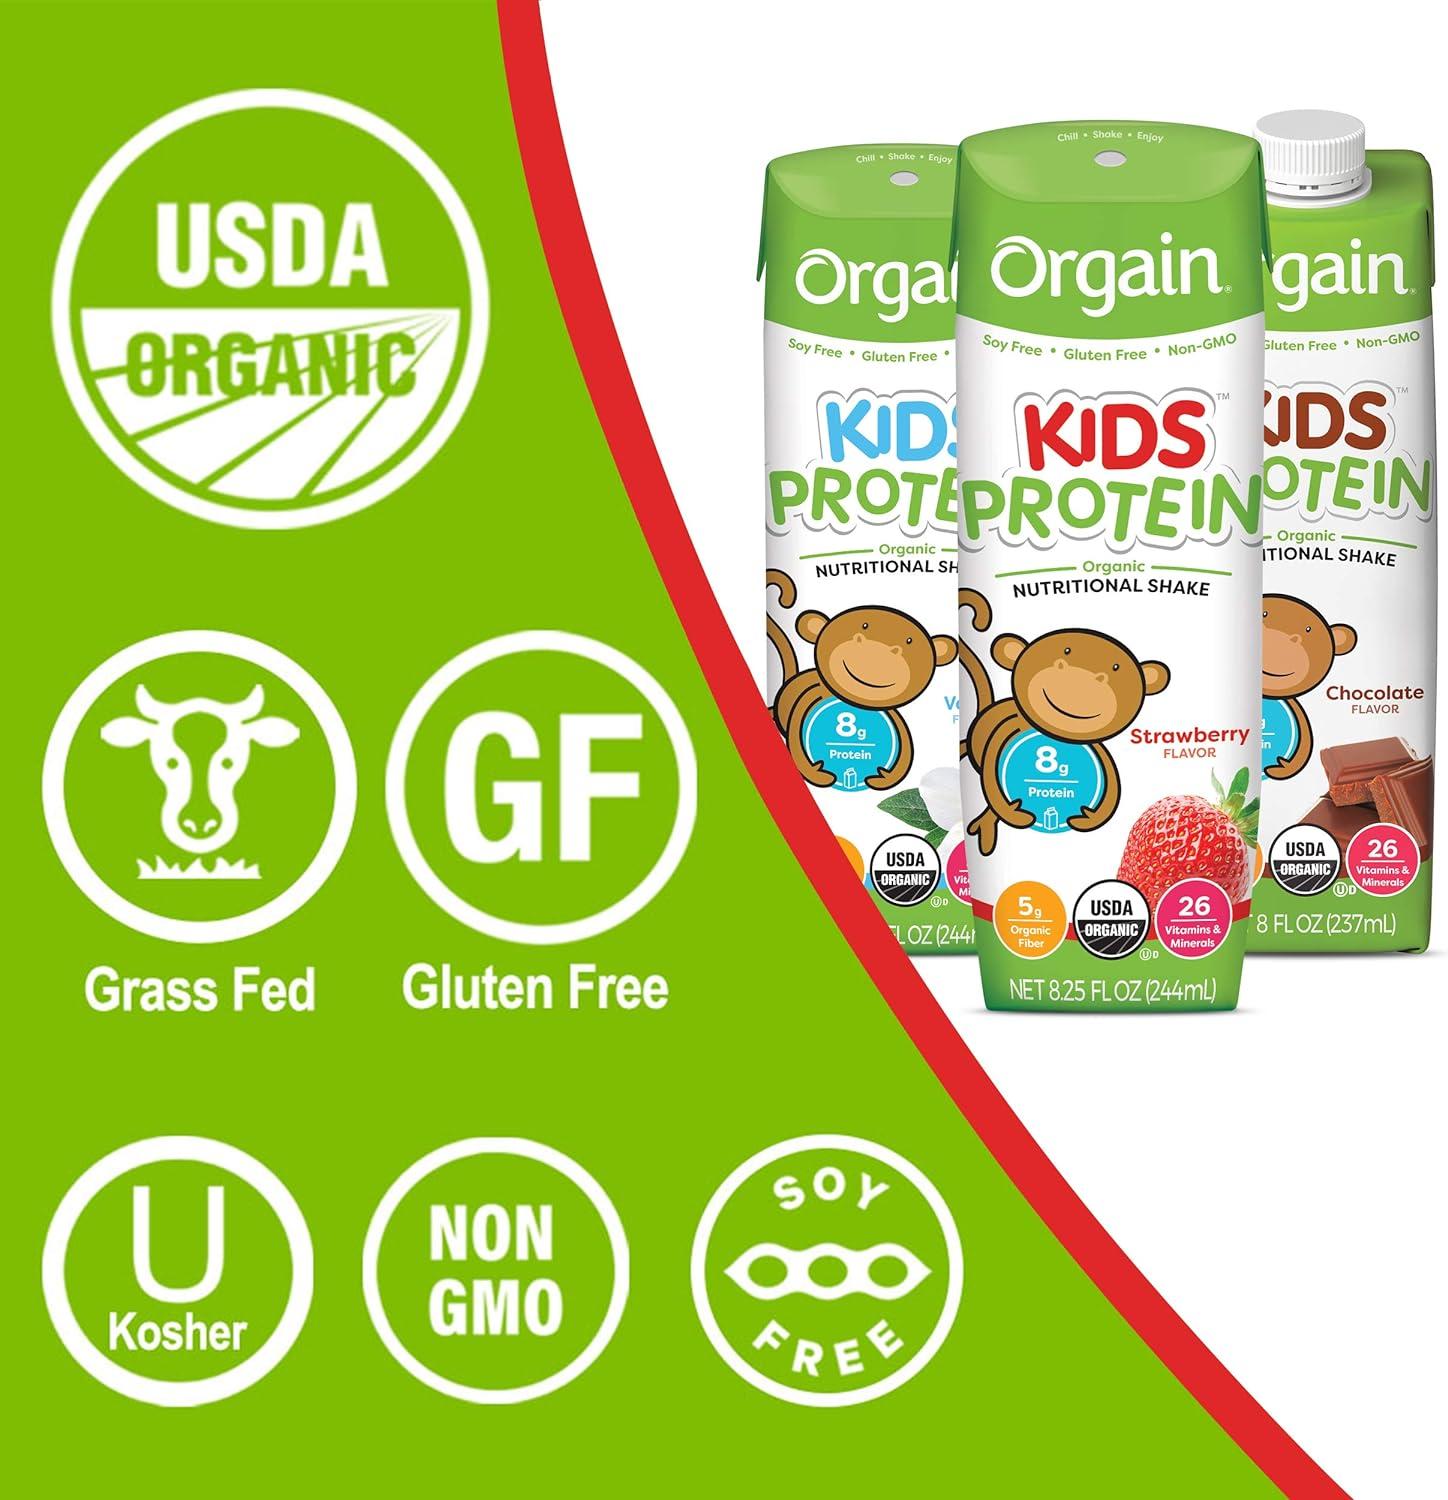 Orgain Healthy Kids Organic Nutritional Shake, Strawberry - 12 pack, 8.25 fl oz cartons